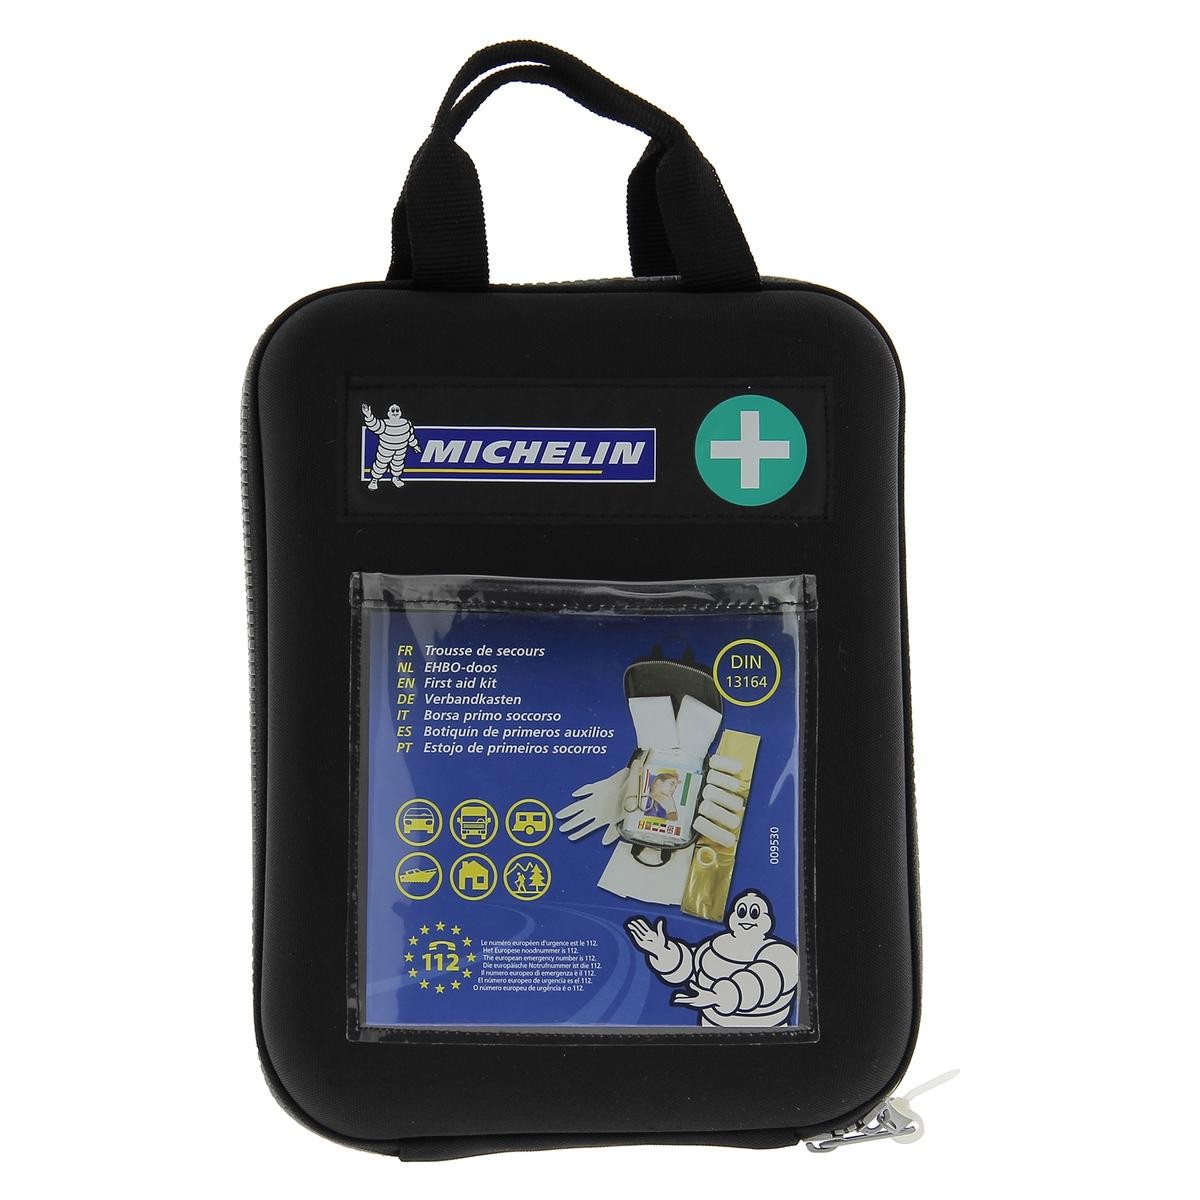 NEW Mercedes-Benz Emergency Medical First Aid Kit Bag DIN 13164